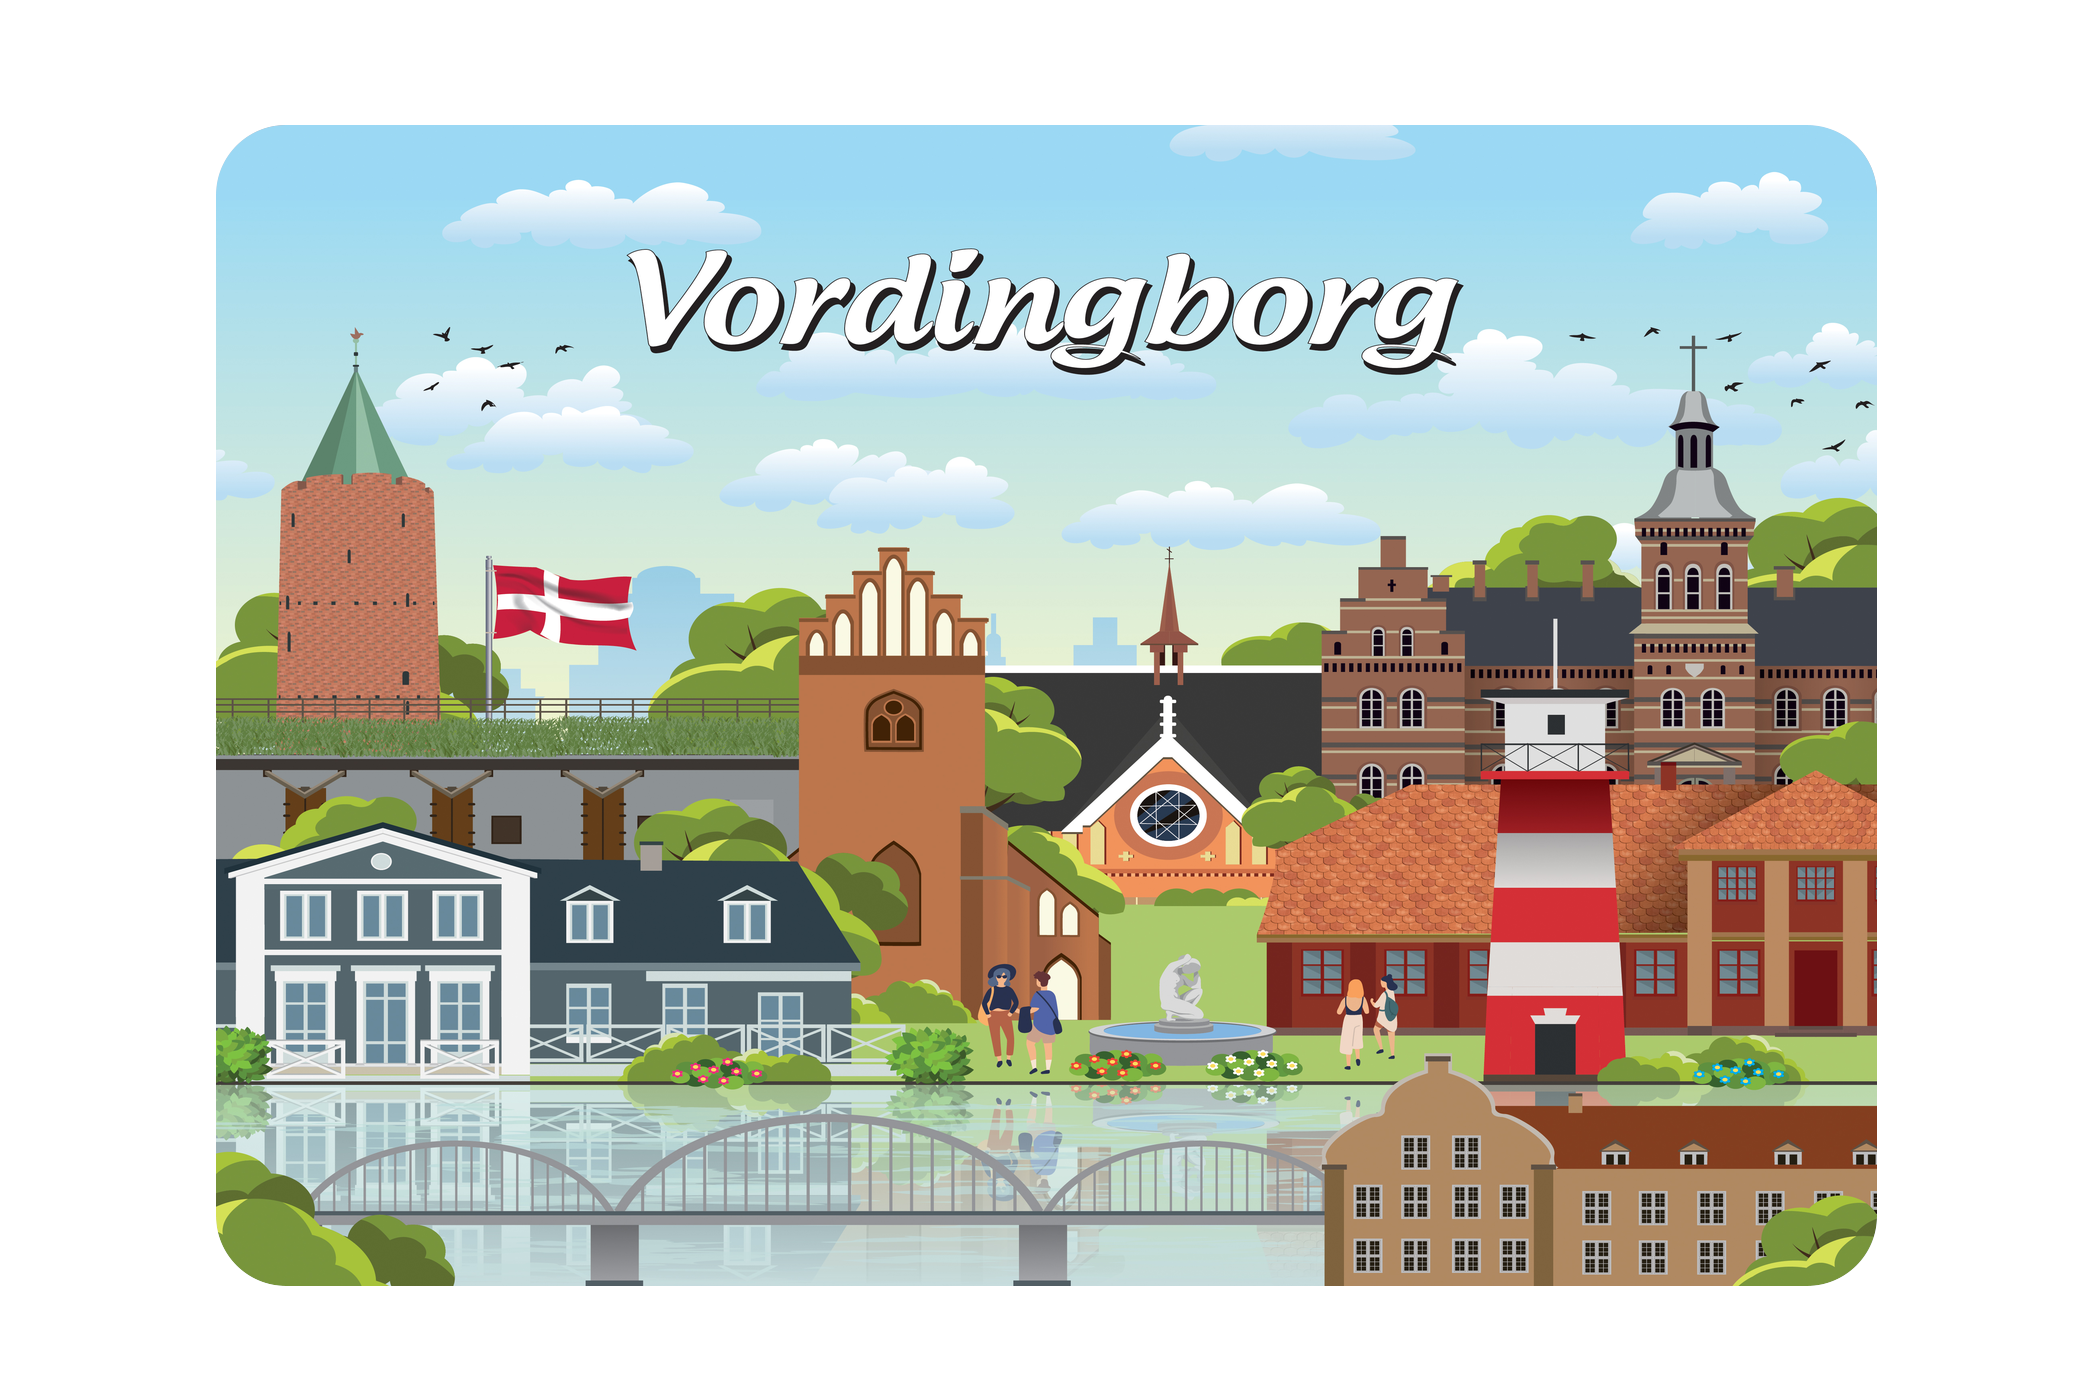 Vordingborg - Bykoncept